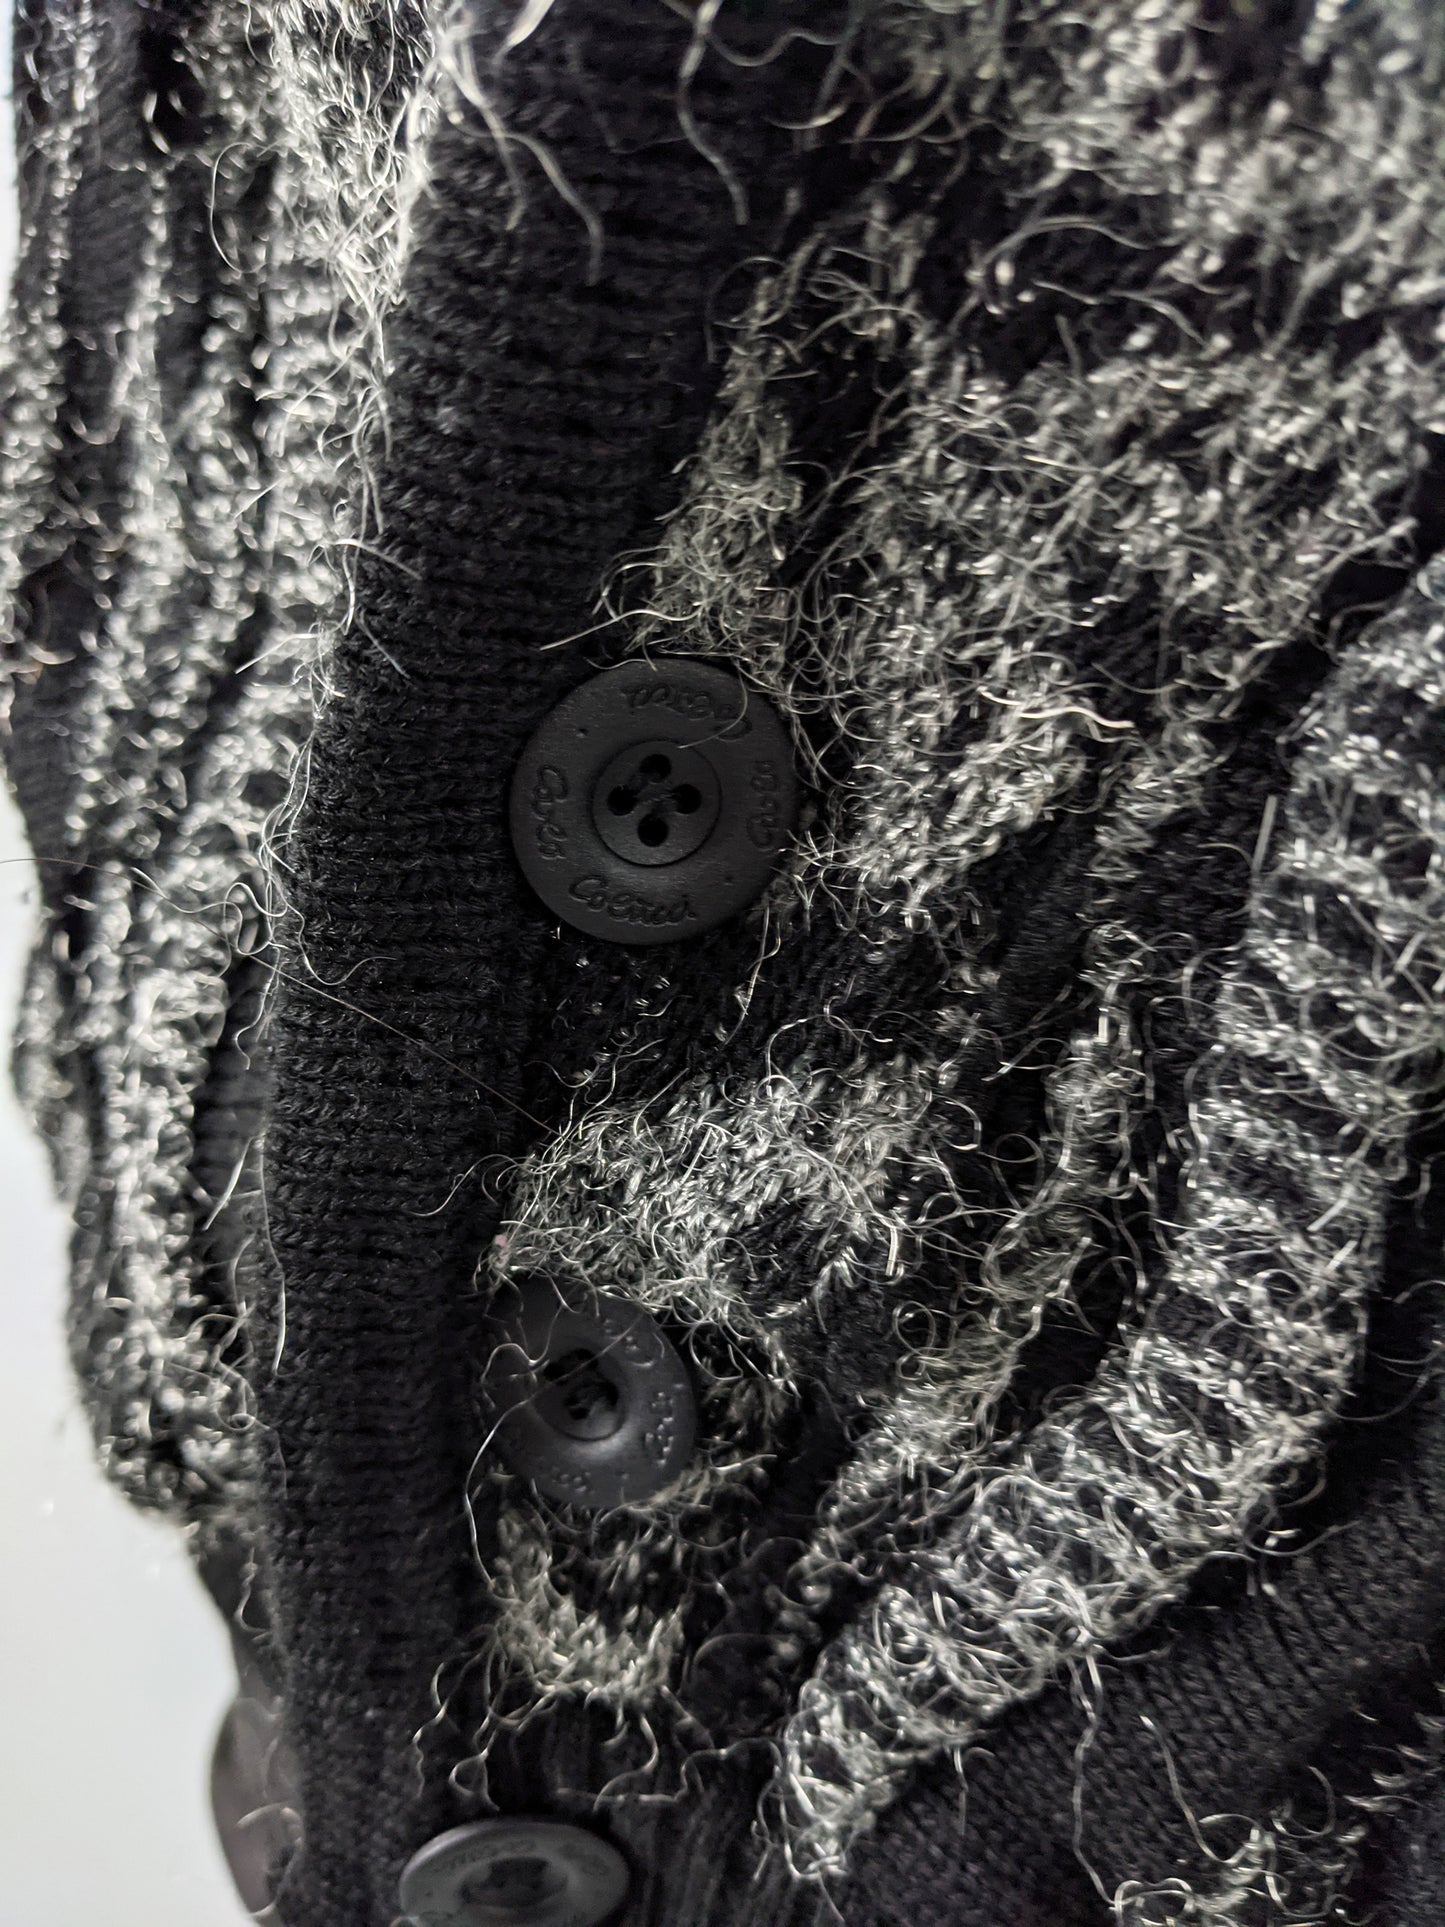 Mens Vintage Black & Silver Textured Fuzzy Knit Jacket, 1980s